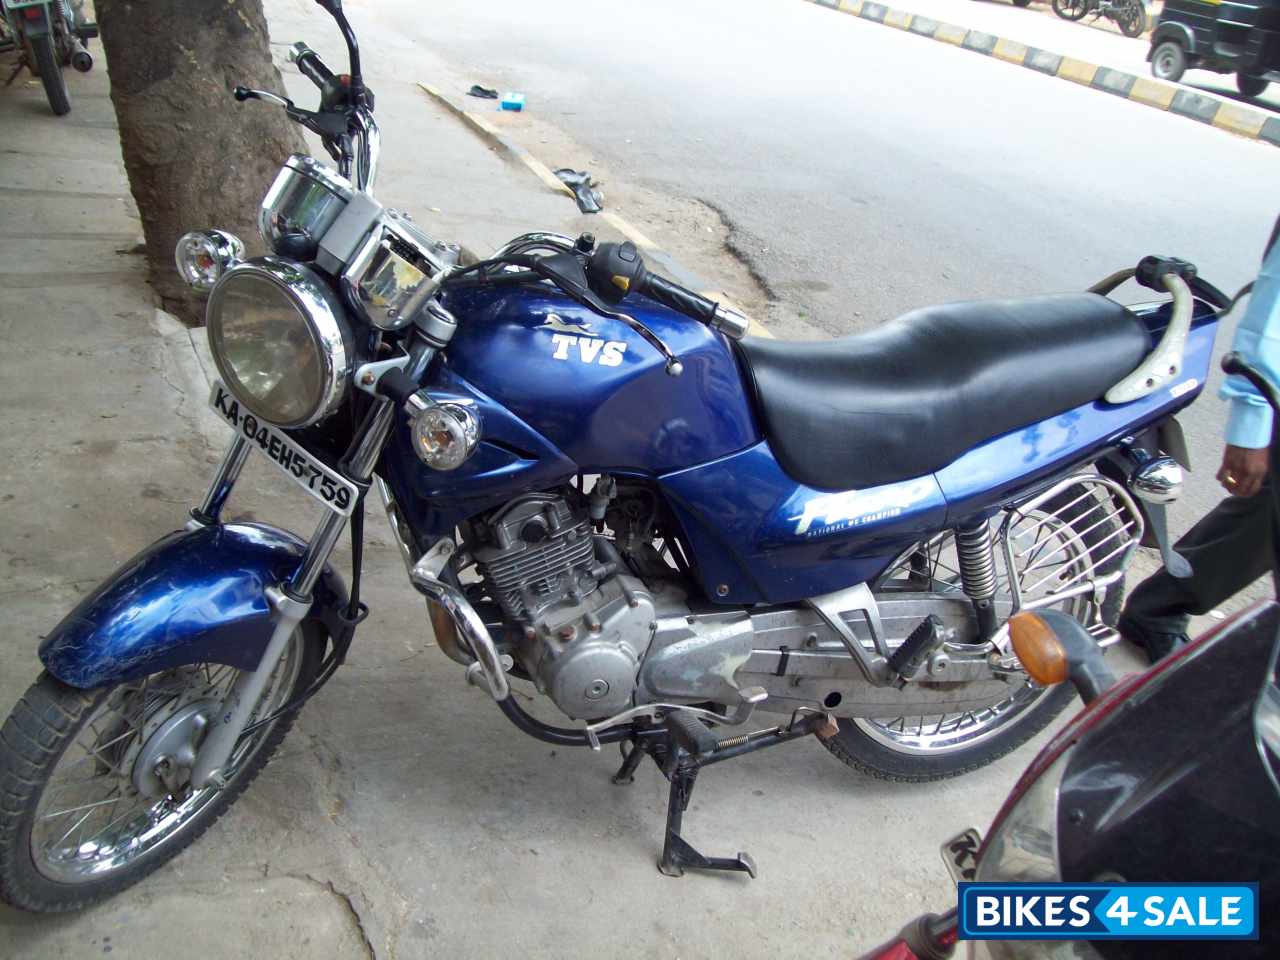 TVS Fiero FX Picture 1. Bike ID 89213. Bike located in Bangalore - Bikes4Sale